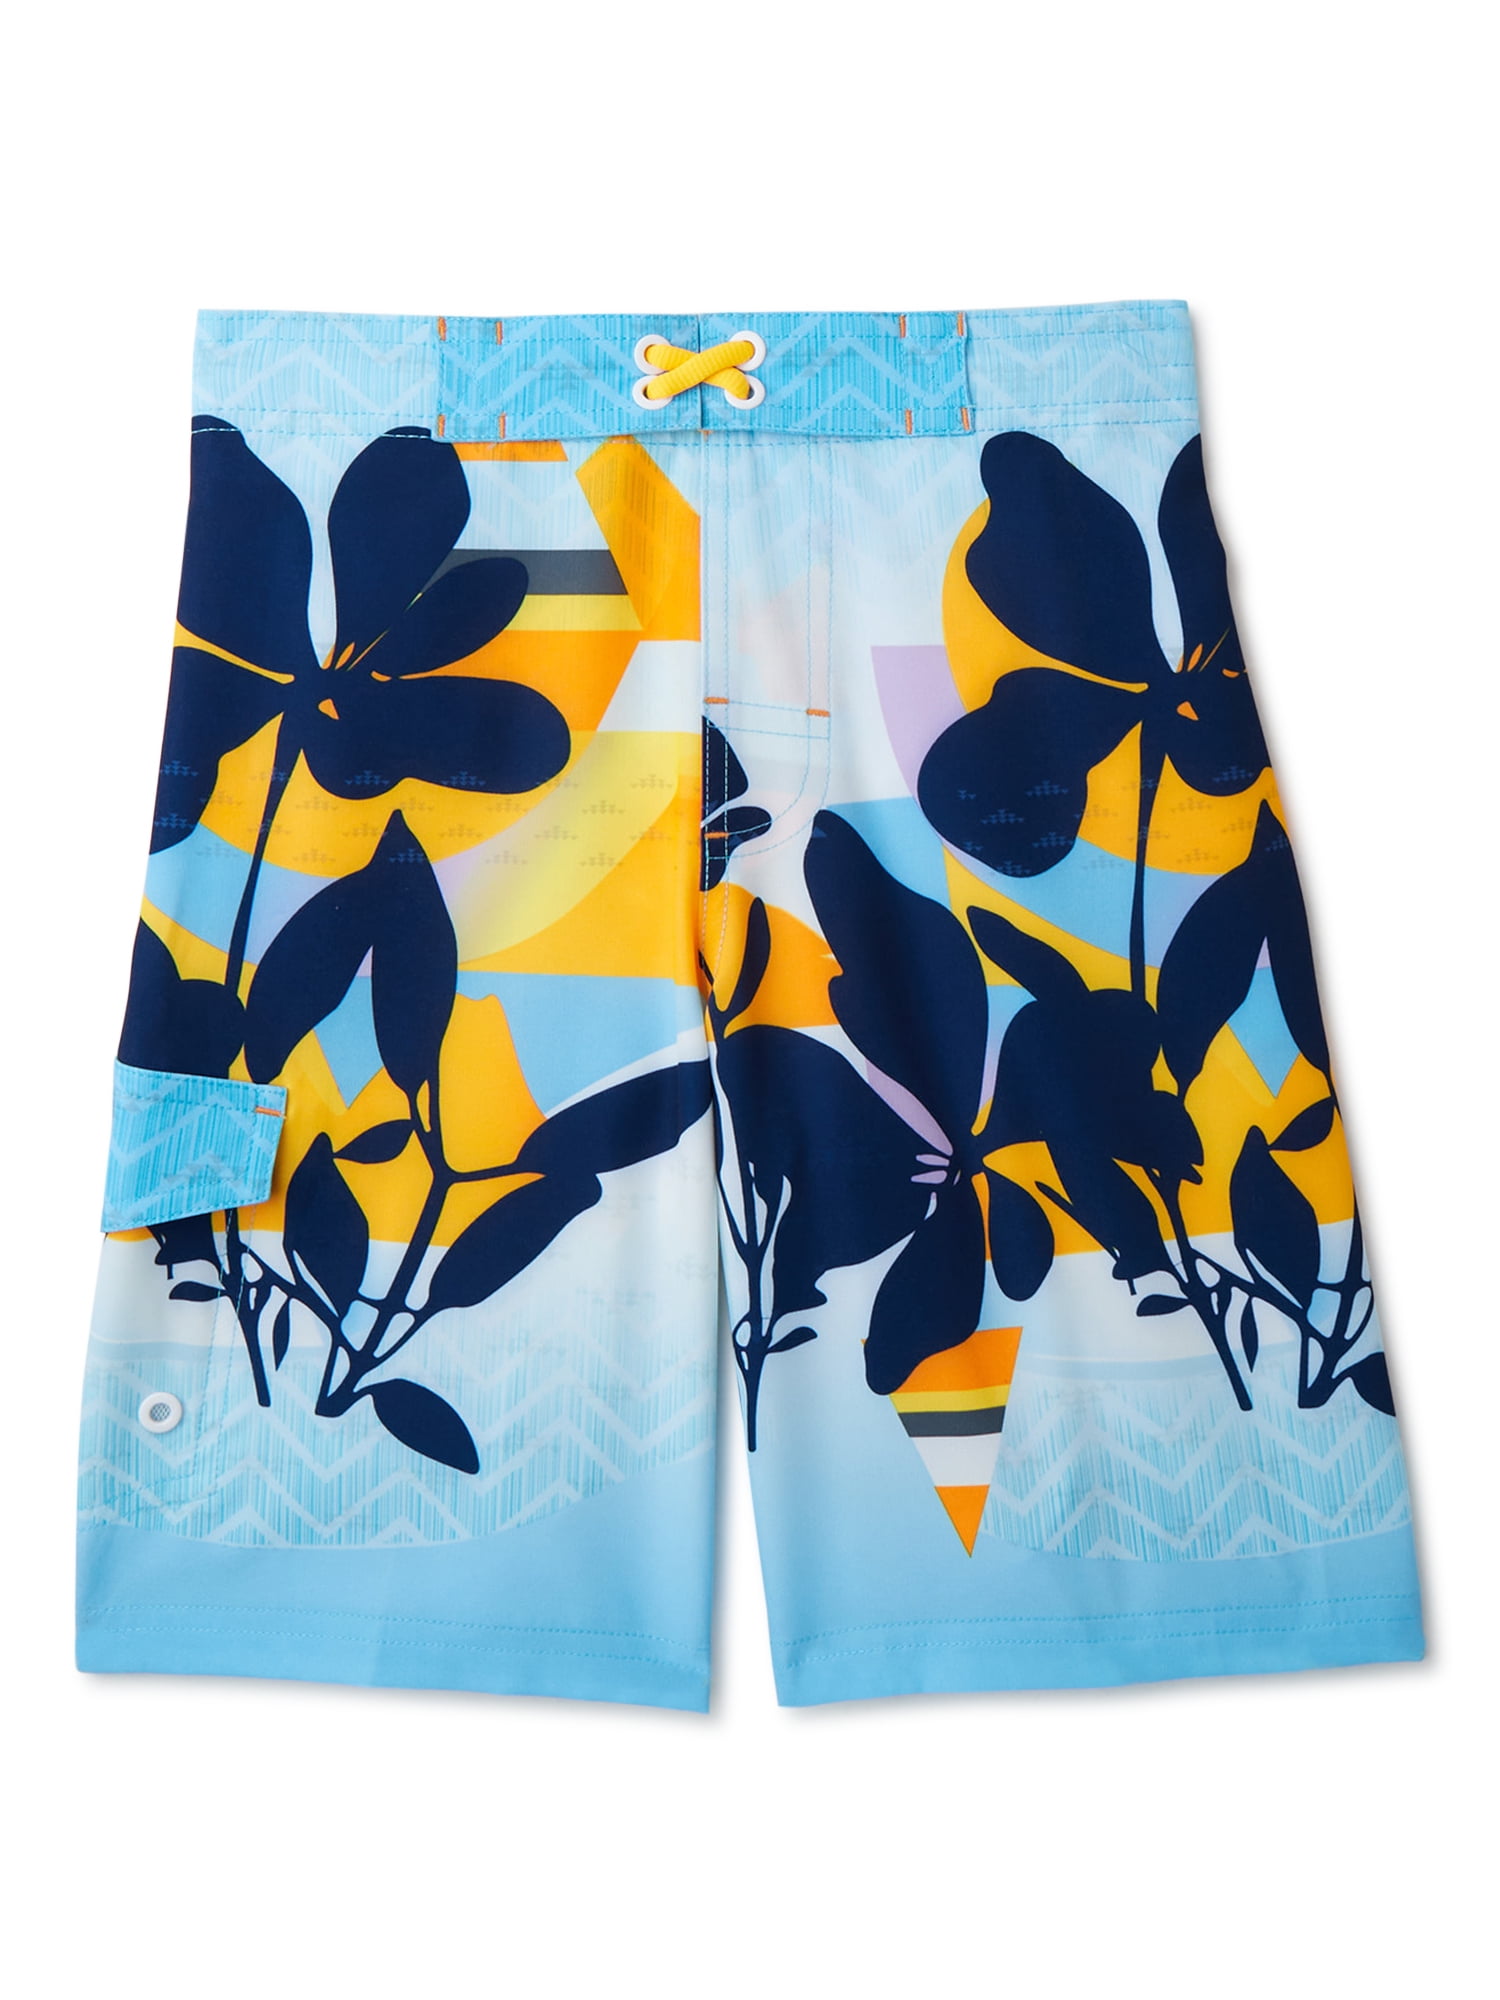 NSYUR Mens Glare Stripes Summer Holiday Quick-Drying Swim Trunks Beach Shorts Board Shorts